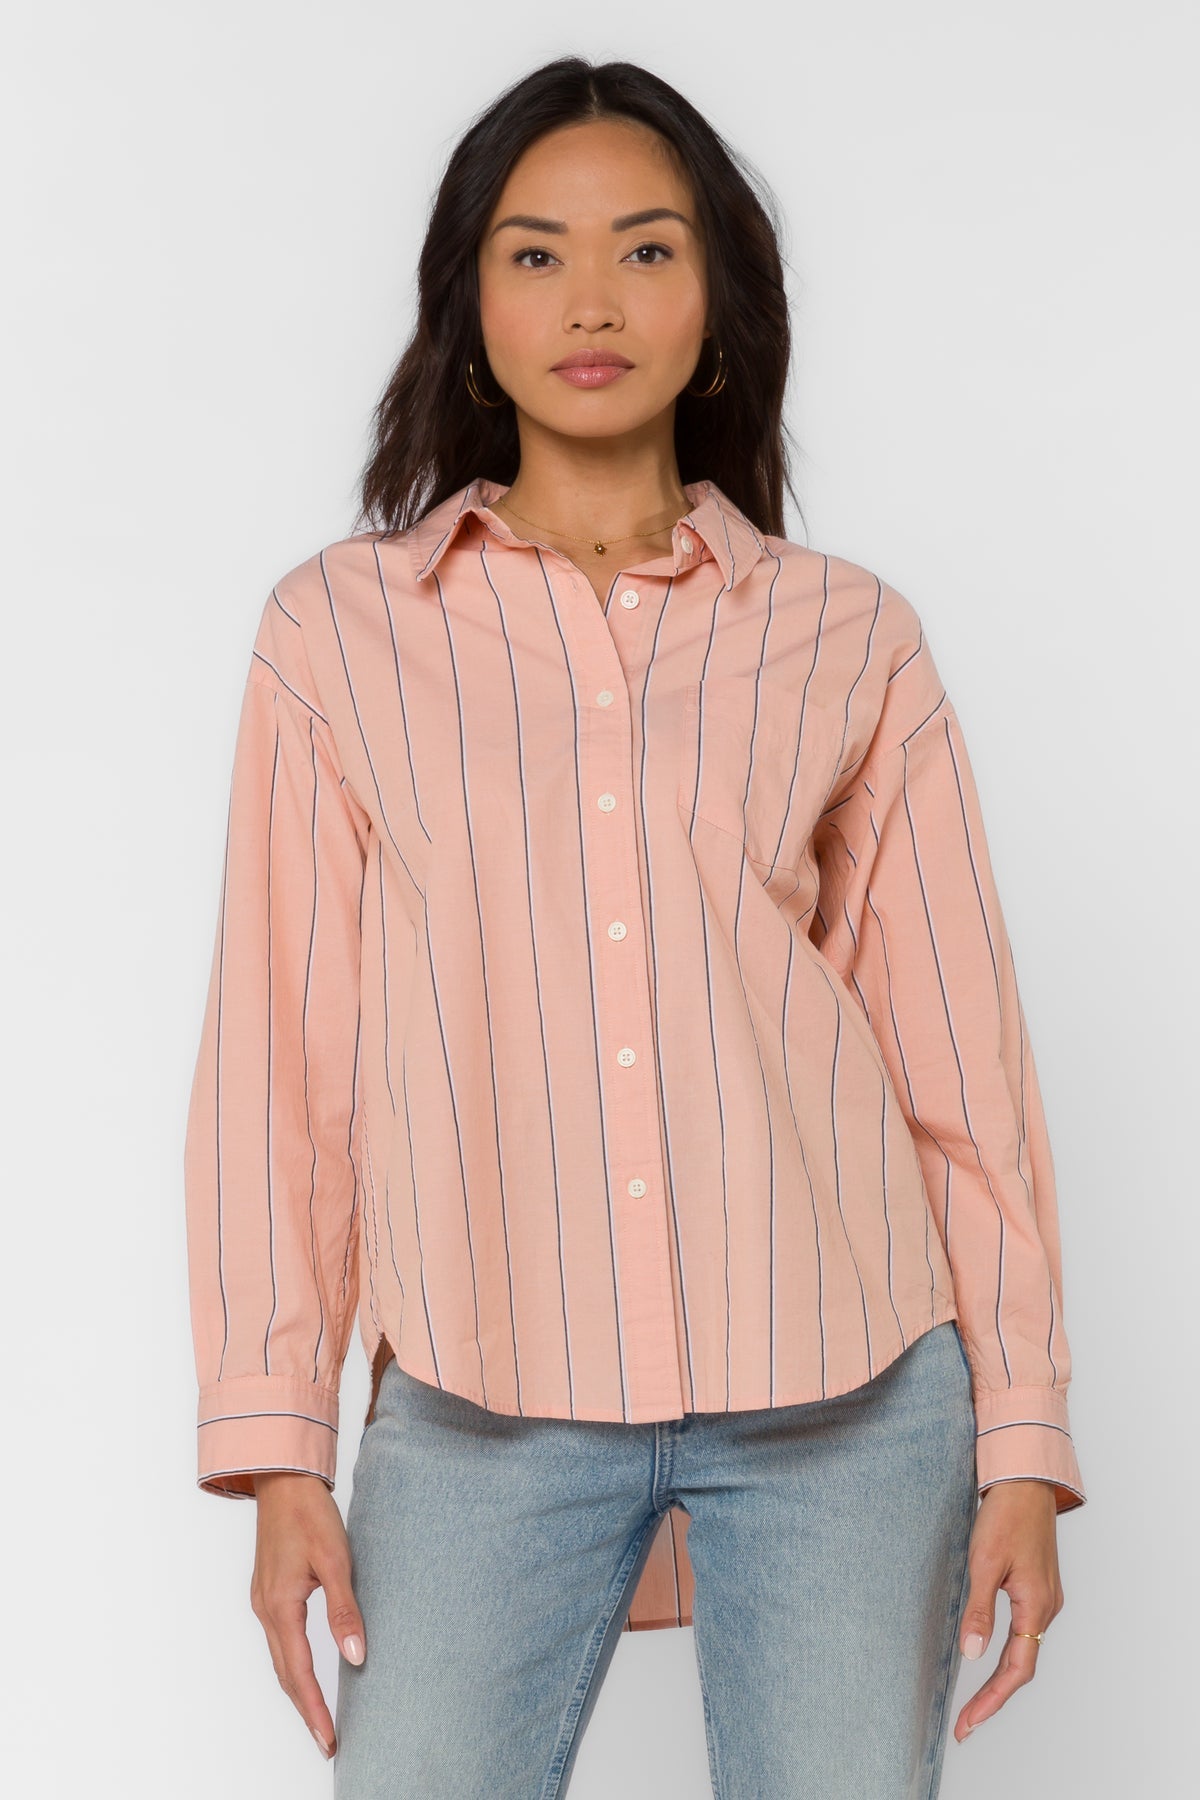 Randall Stripe Shirt